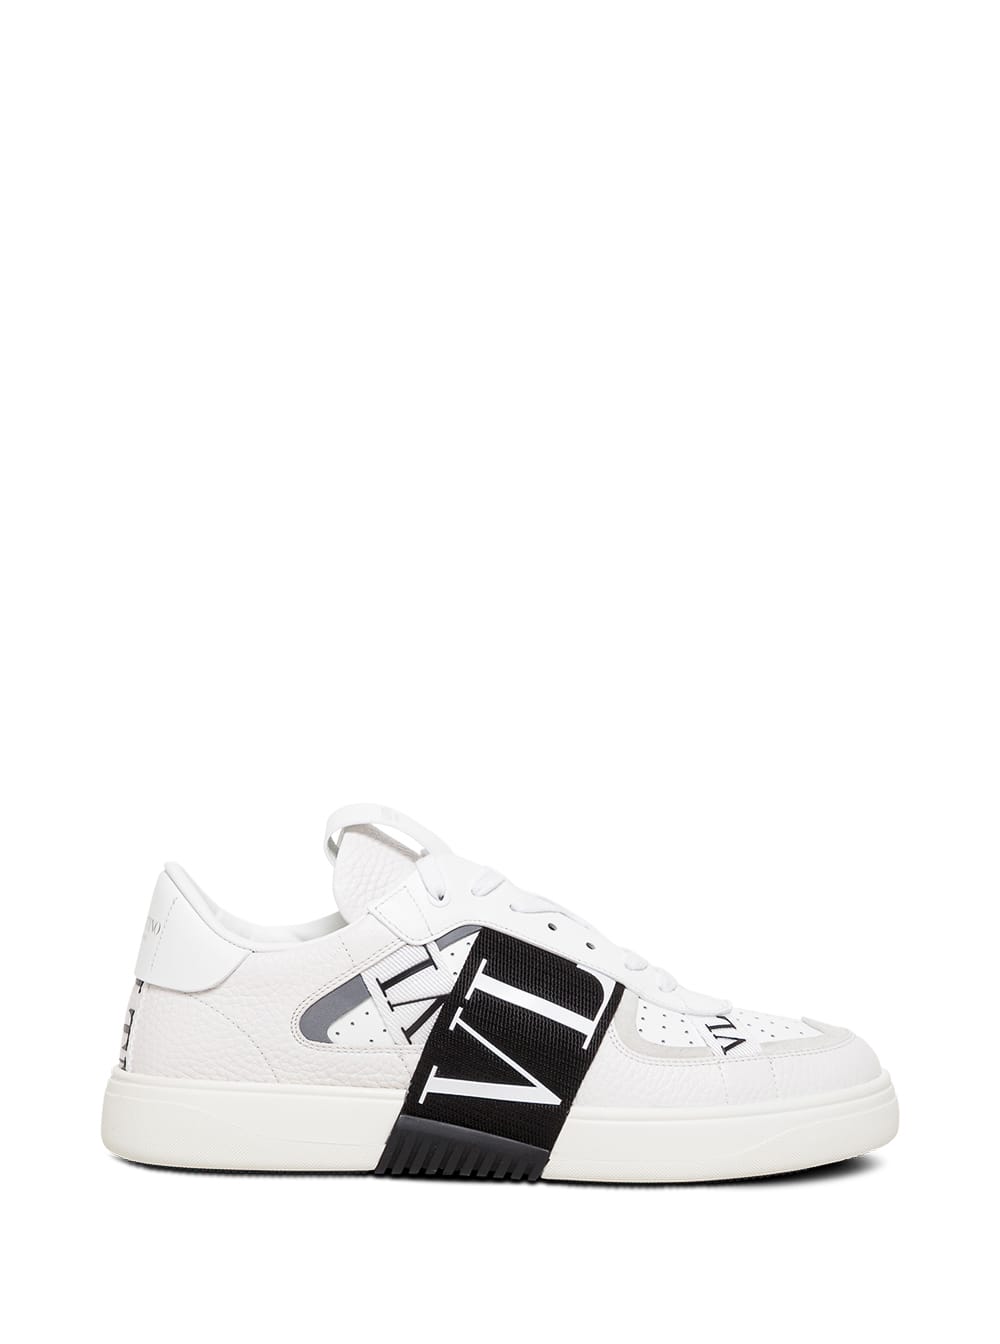 Valentino Garavani Vl7n White Leather Sneakers